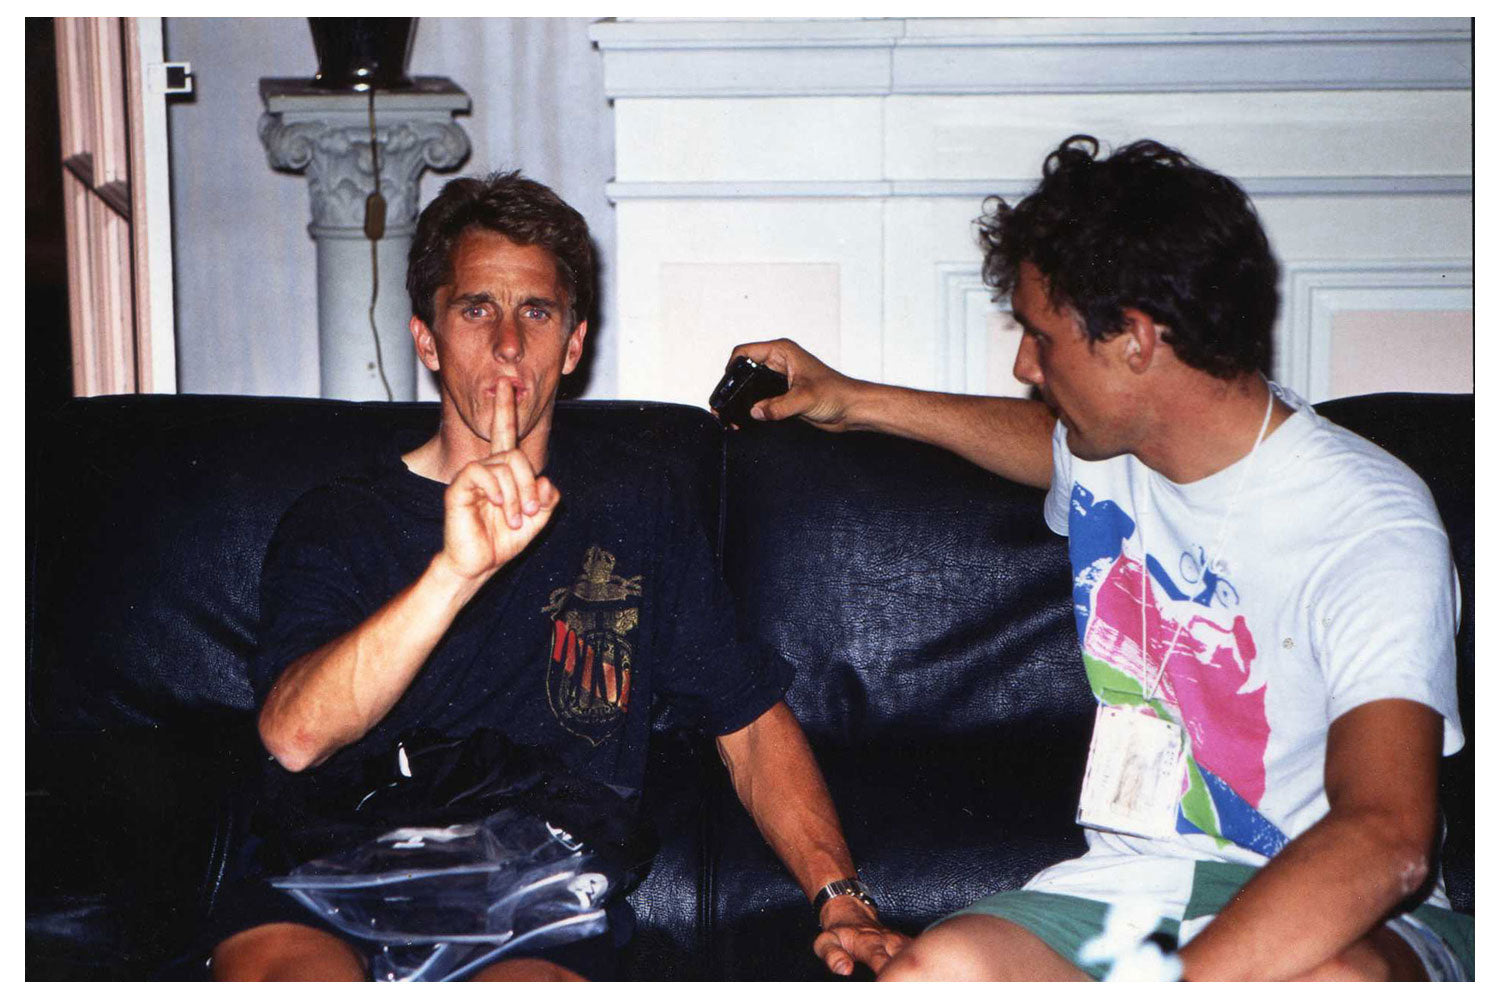 William Fotheringham interviewing Greg LeMond the night before Greg won the world’s in 1989. Photo: Mark Wohlwender.